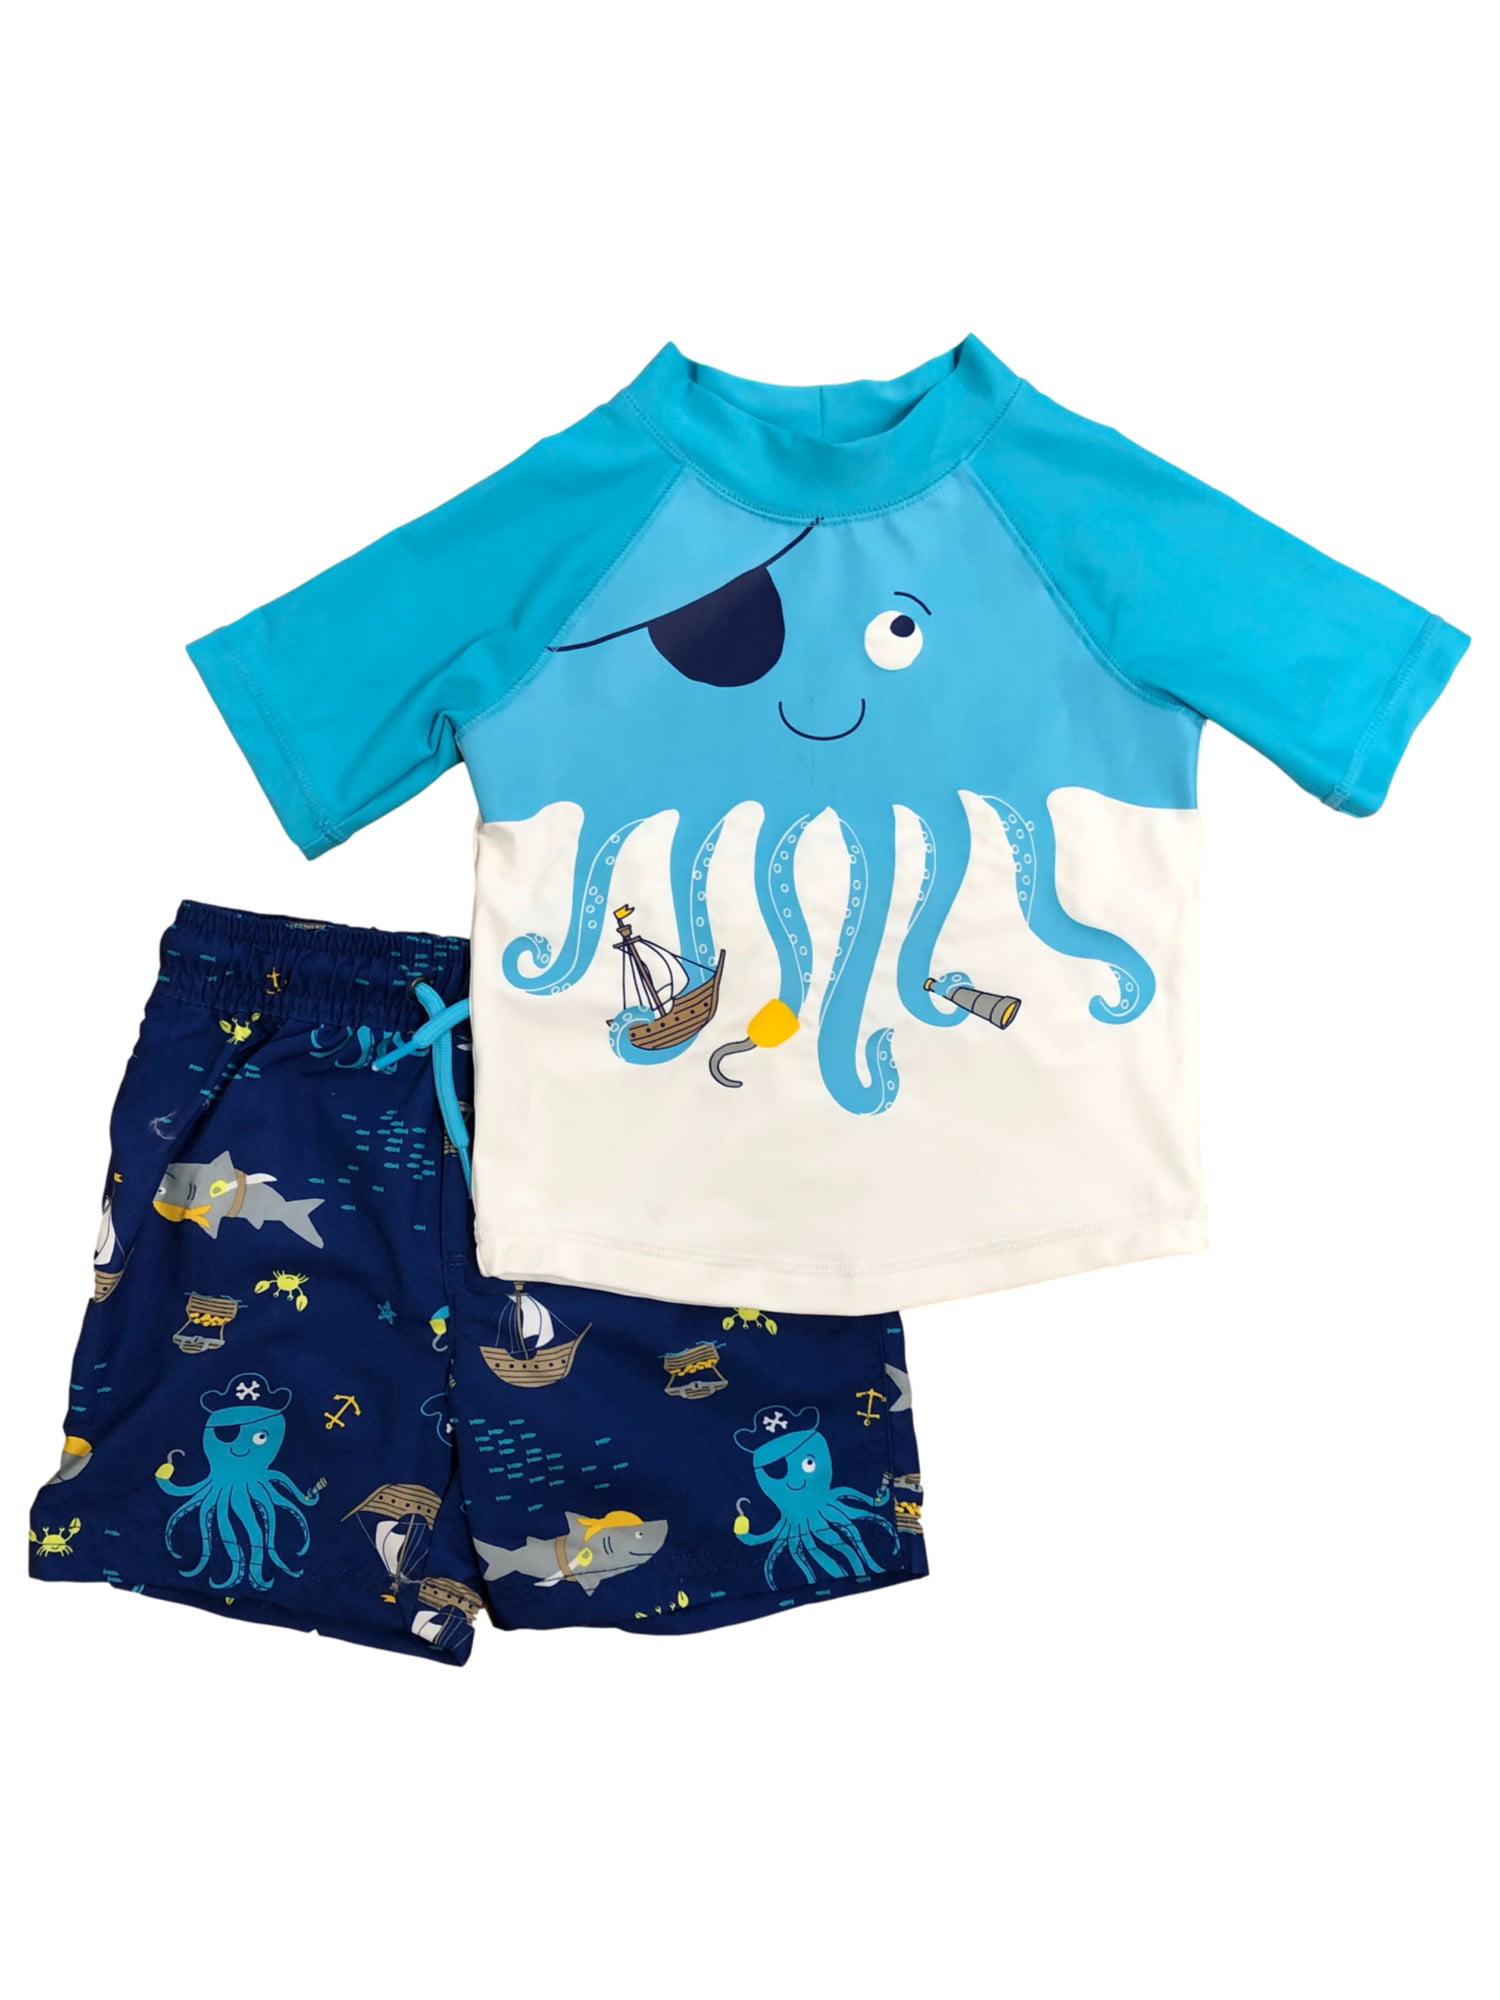 Aruzig Toddler Baby Boys Swimsuit One Piece Zipper Bathing Suit Swimwear with Hat Octopus Print Rash Guard Surfing Suit Octopus Print Blue, 2-3T 